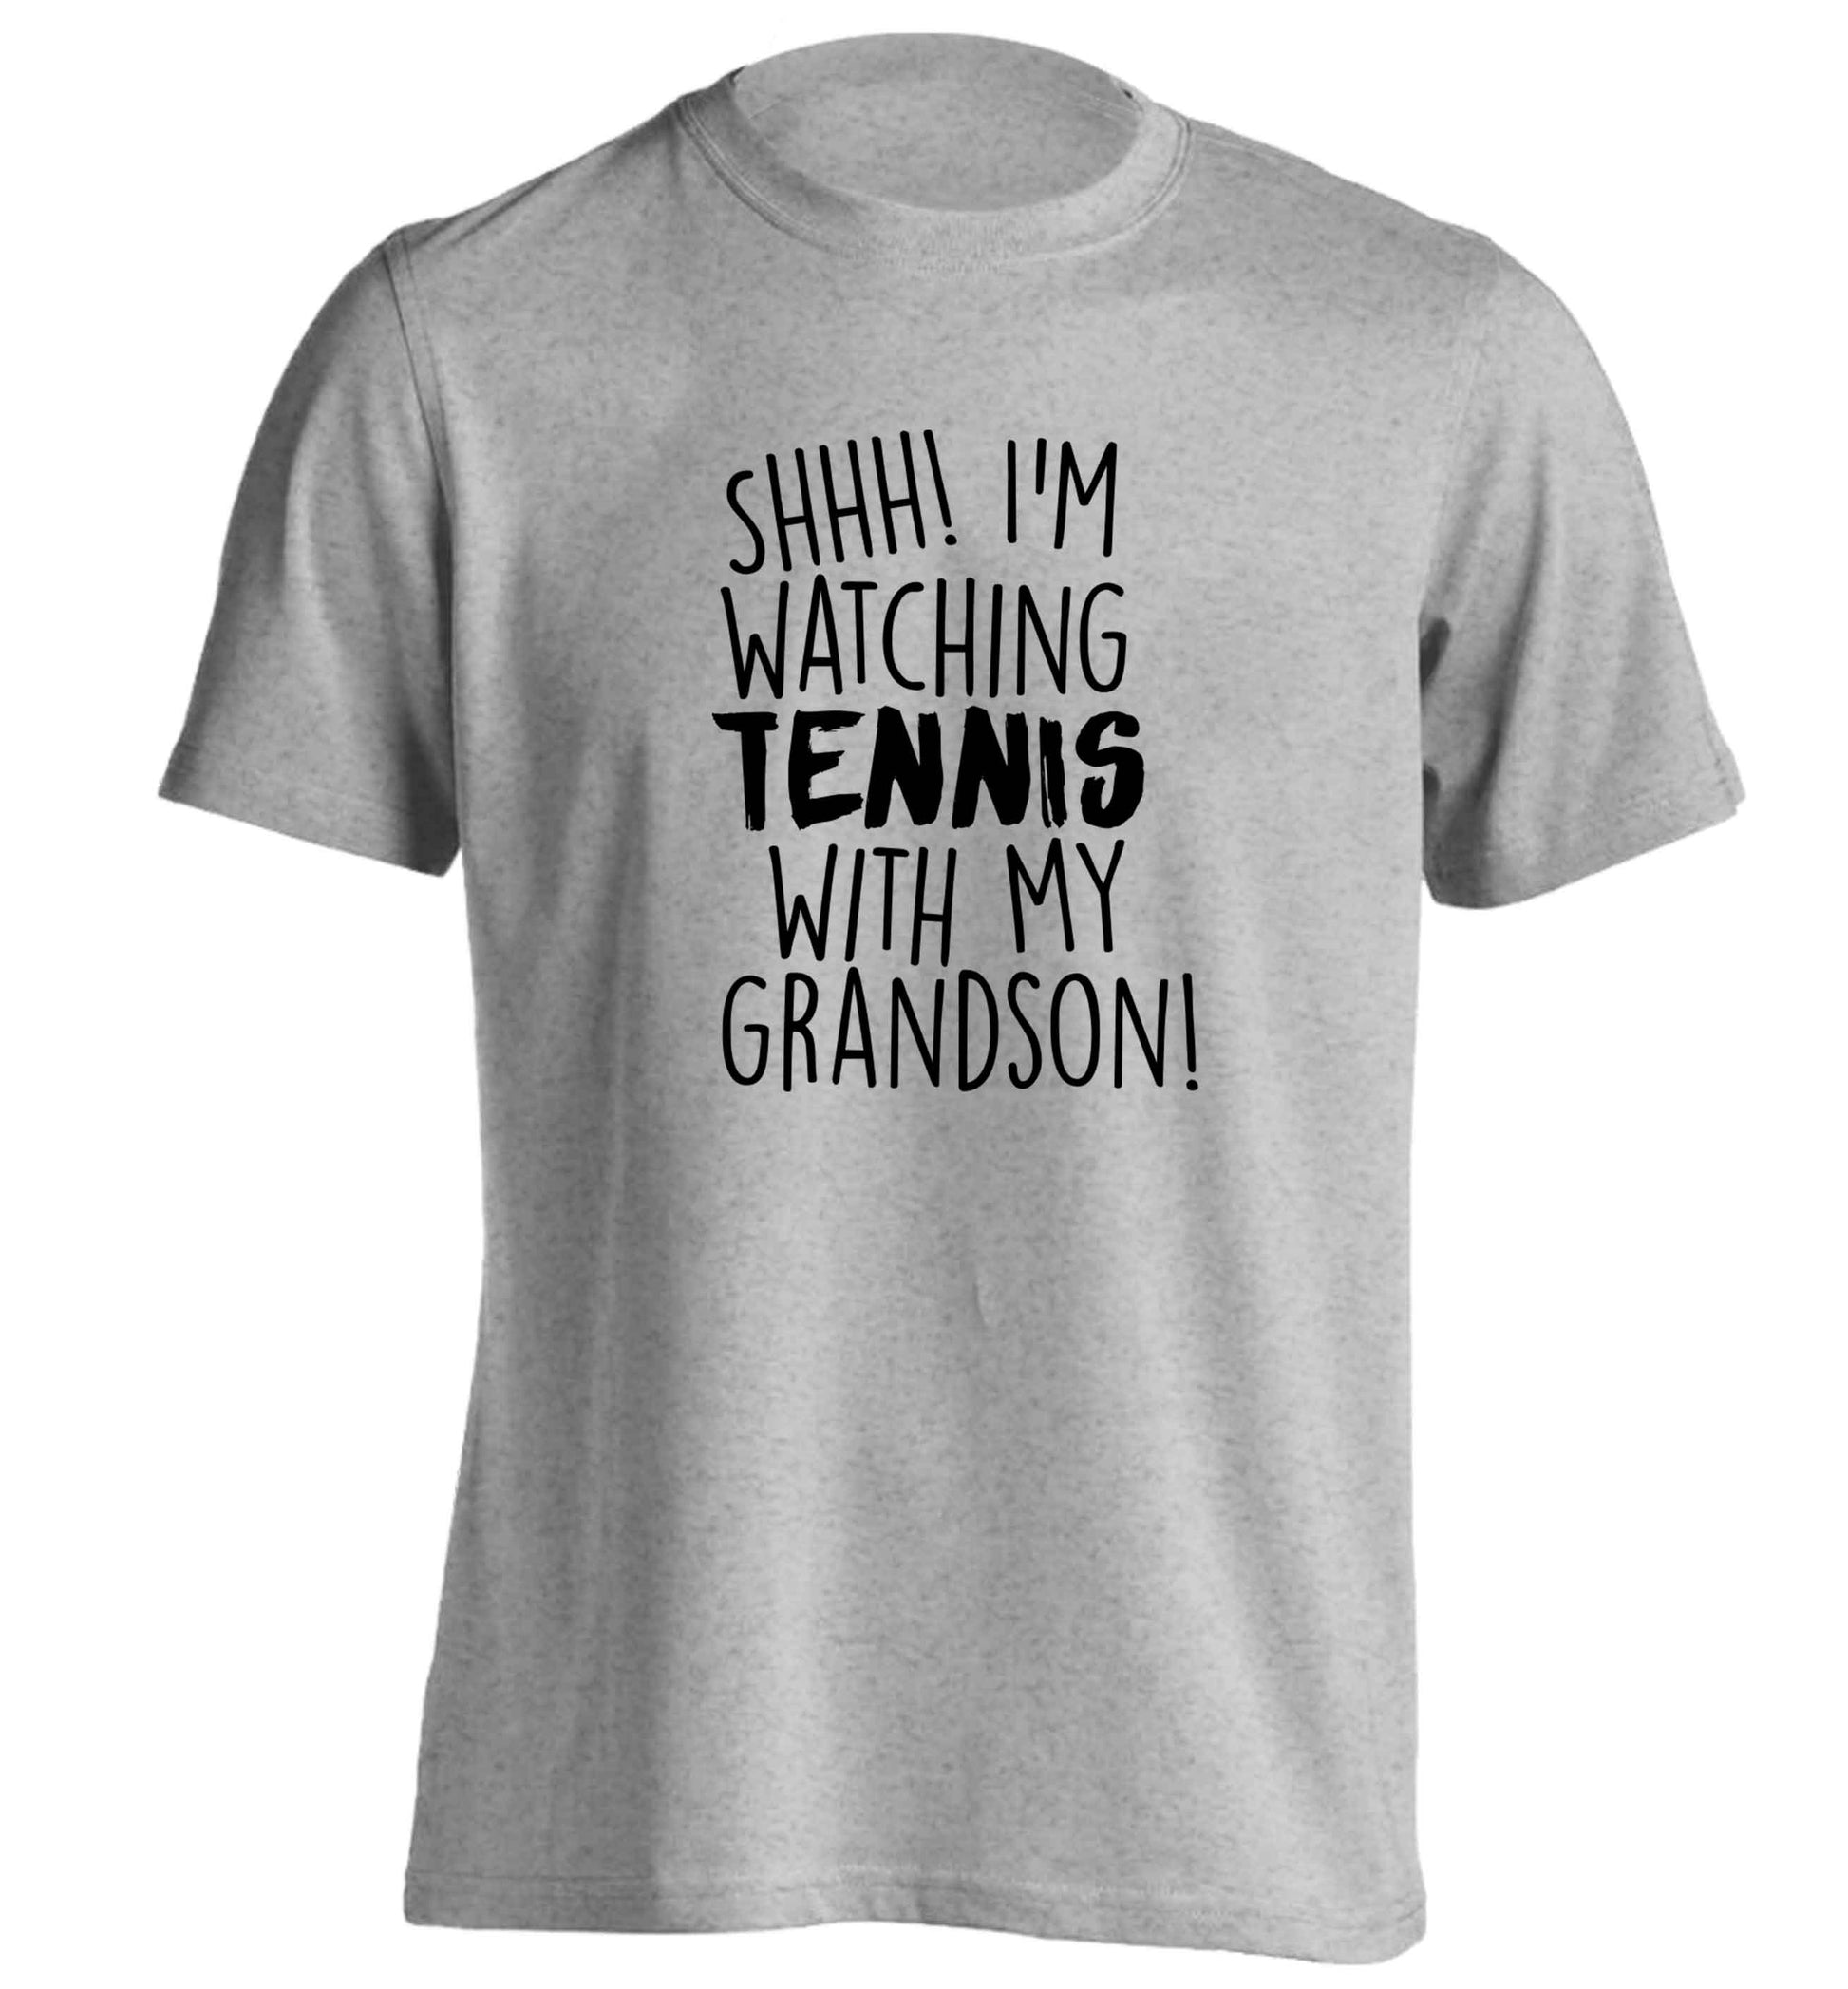 Shh! I'm watching tennis with my grandson! adults unisex grey Tshirt 2XL